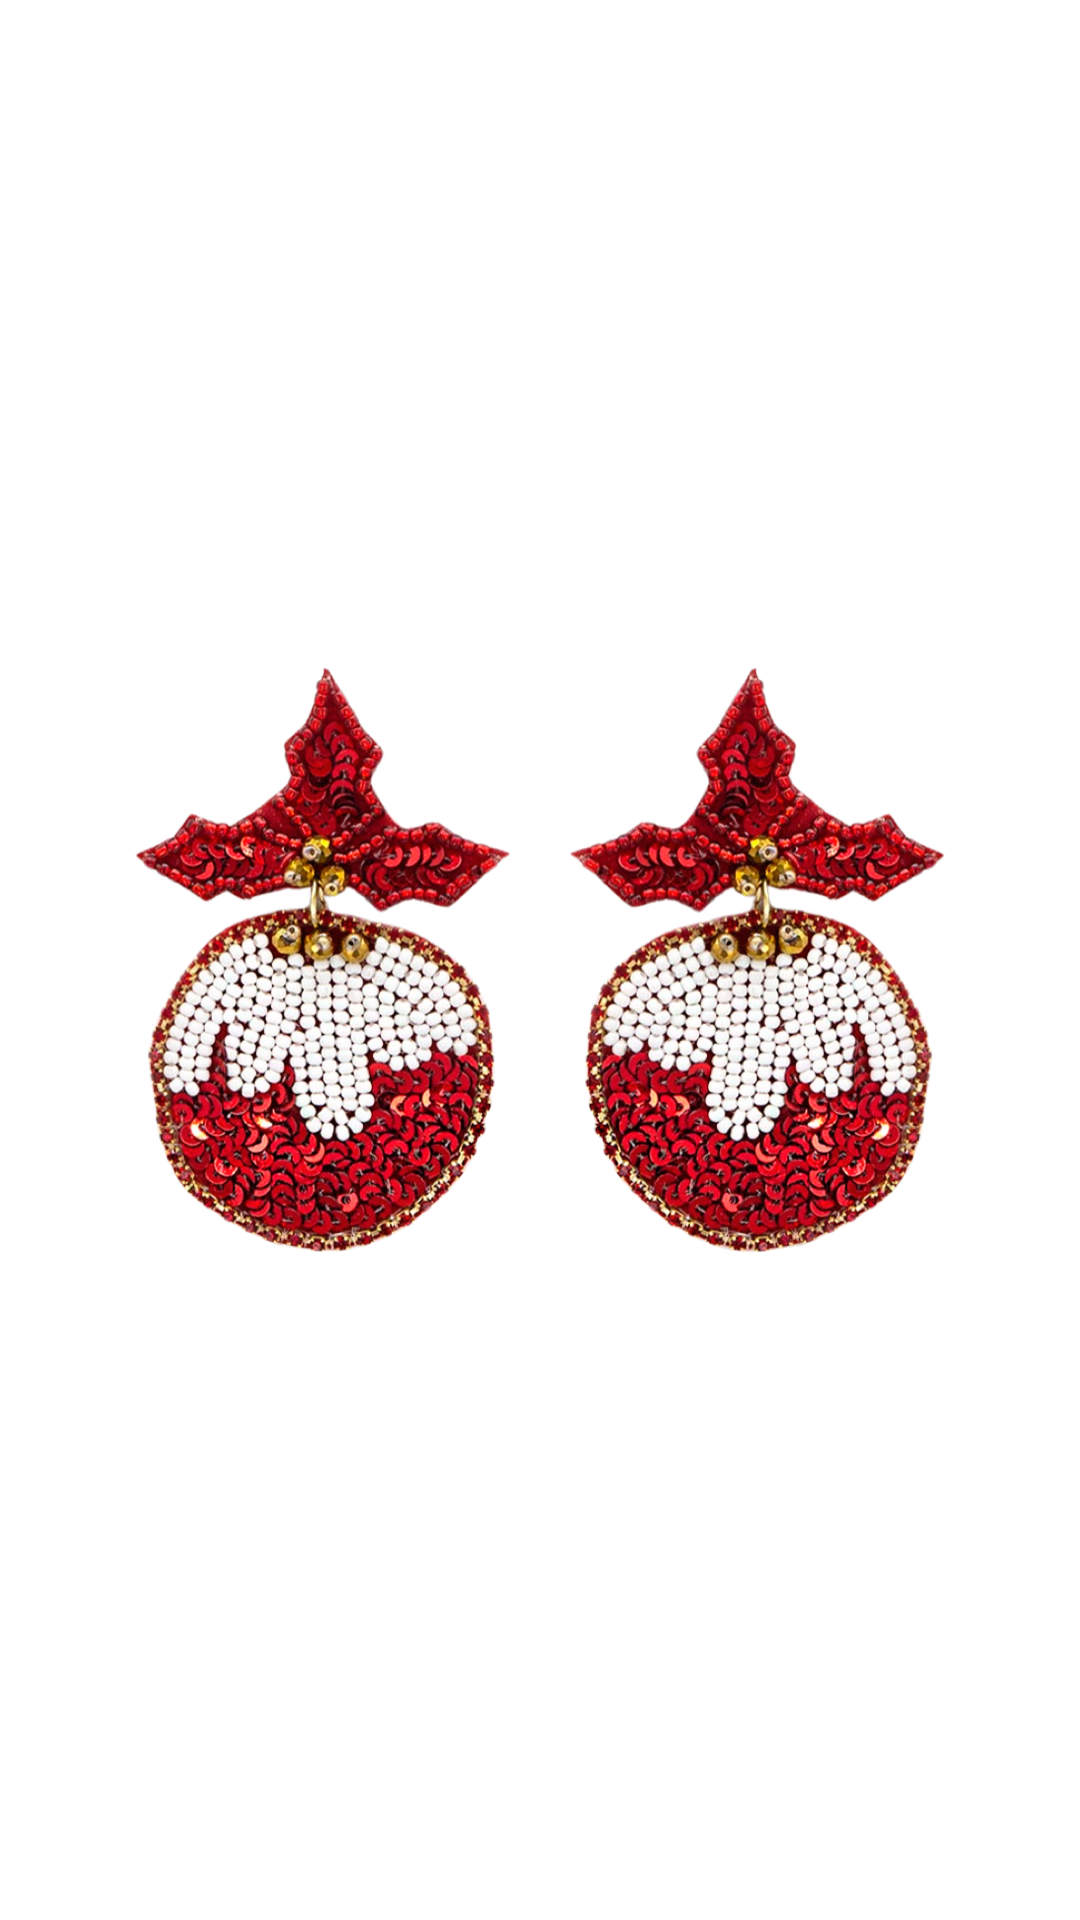 Red Beaded Christmas Ornament Earrings